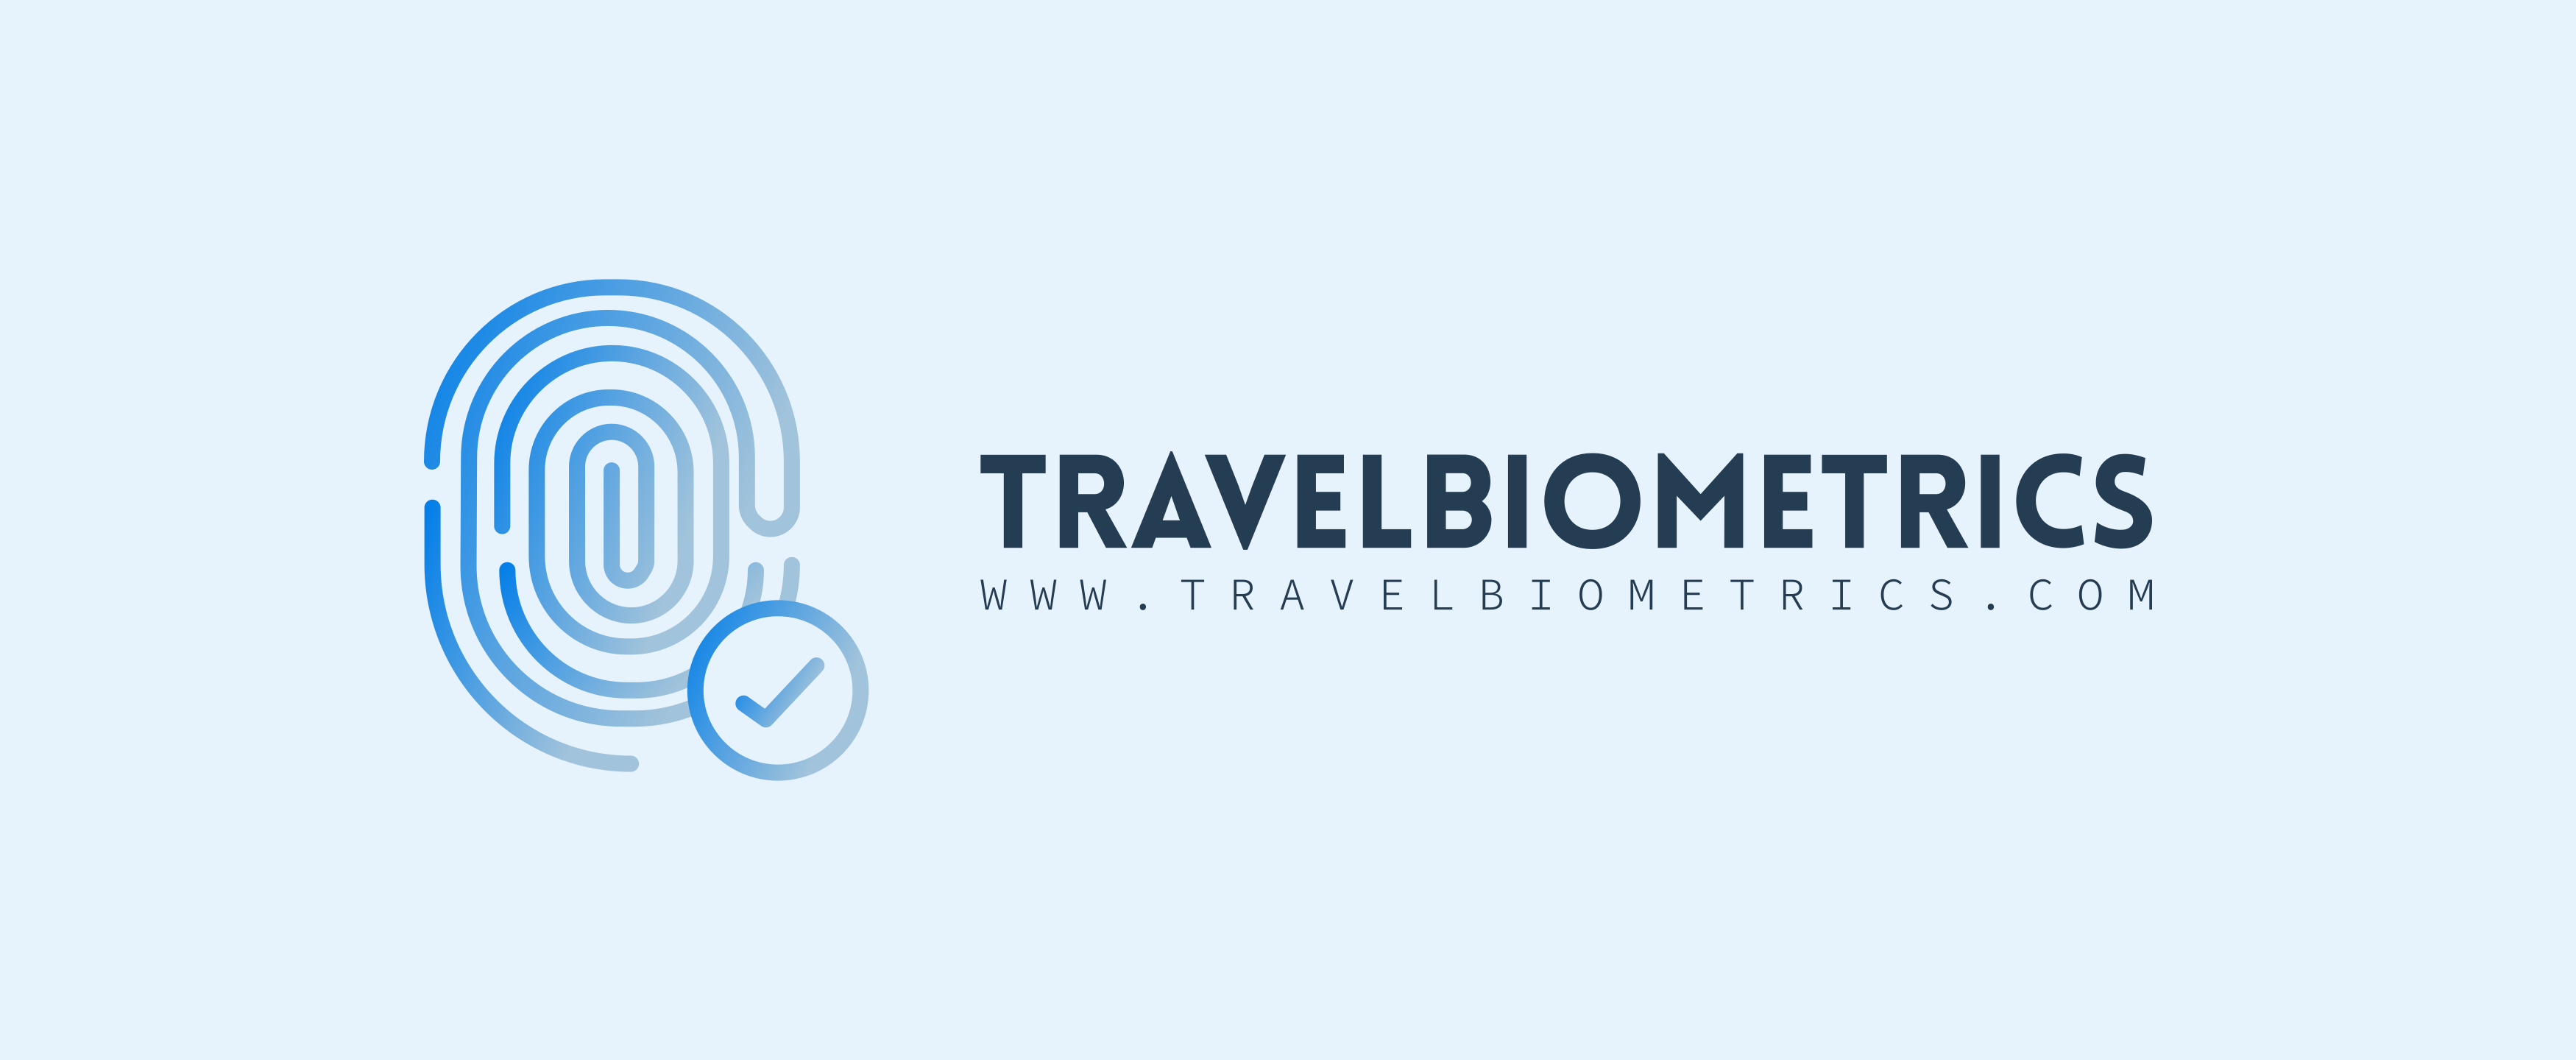 Travel Biometrics